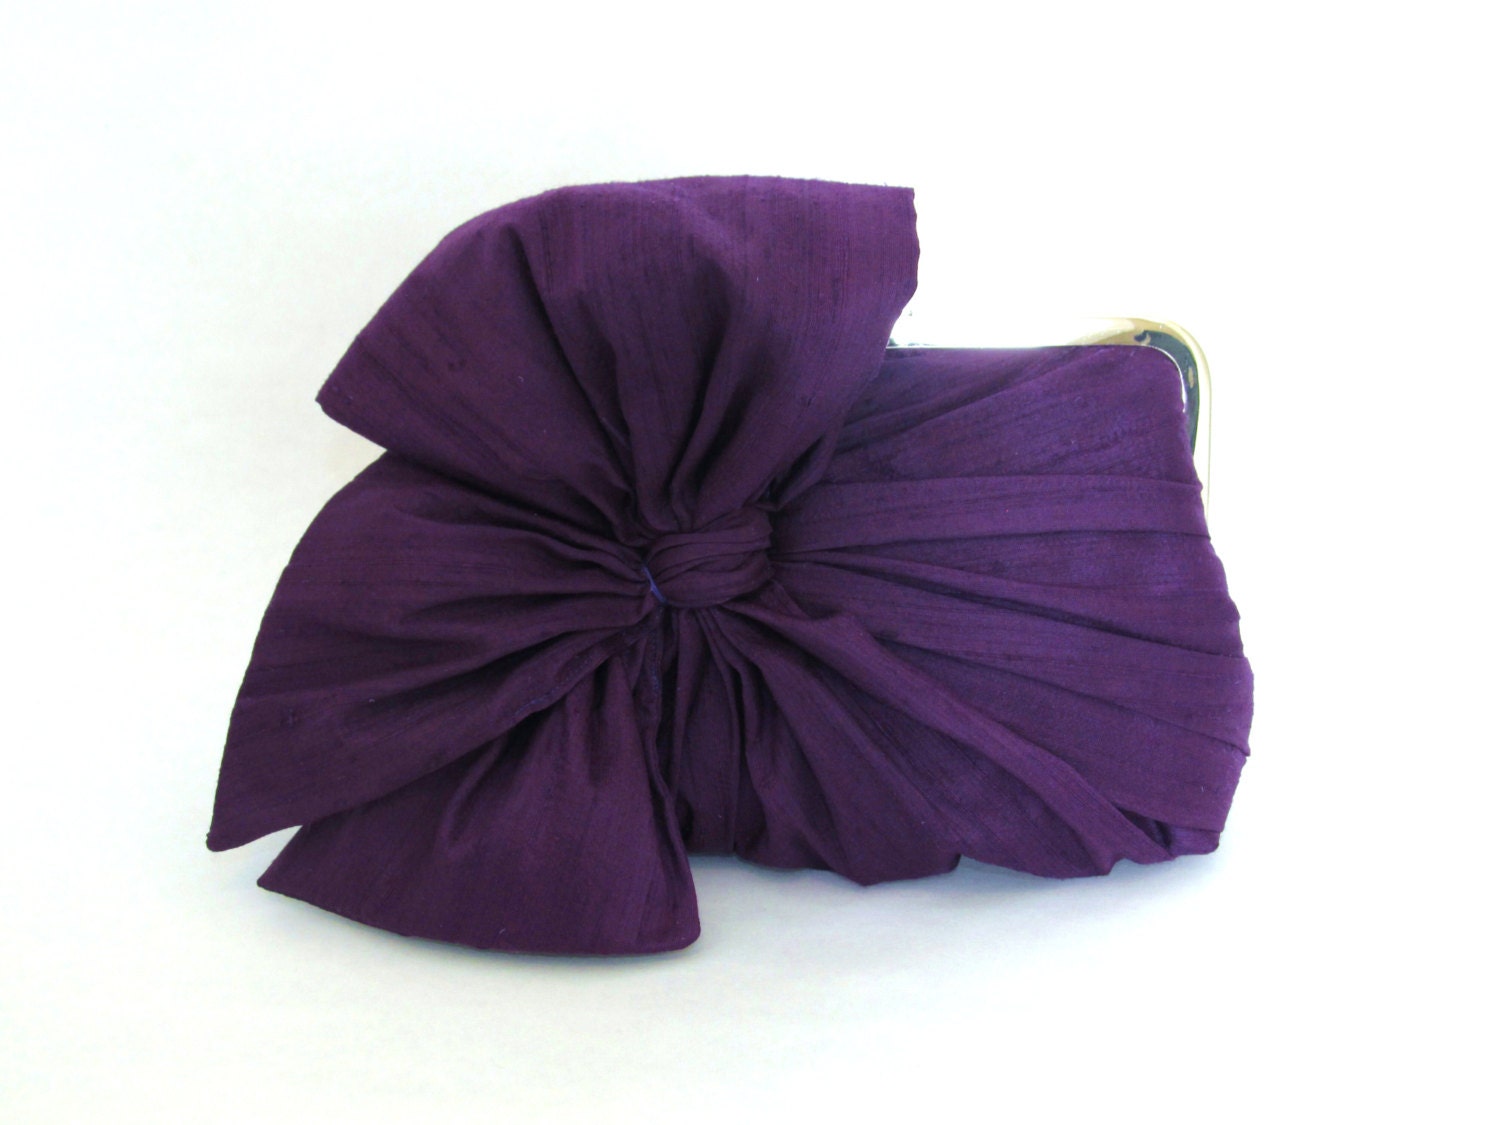 Silk Bow Clutch Purple, Bridal Accessories, Bridal Clutch, Bridesmaid Clutch, Clutch Purse, Formal clutch